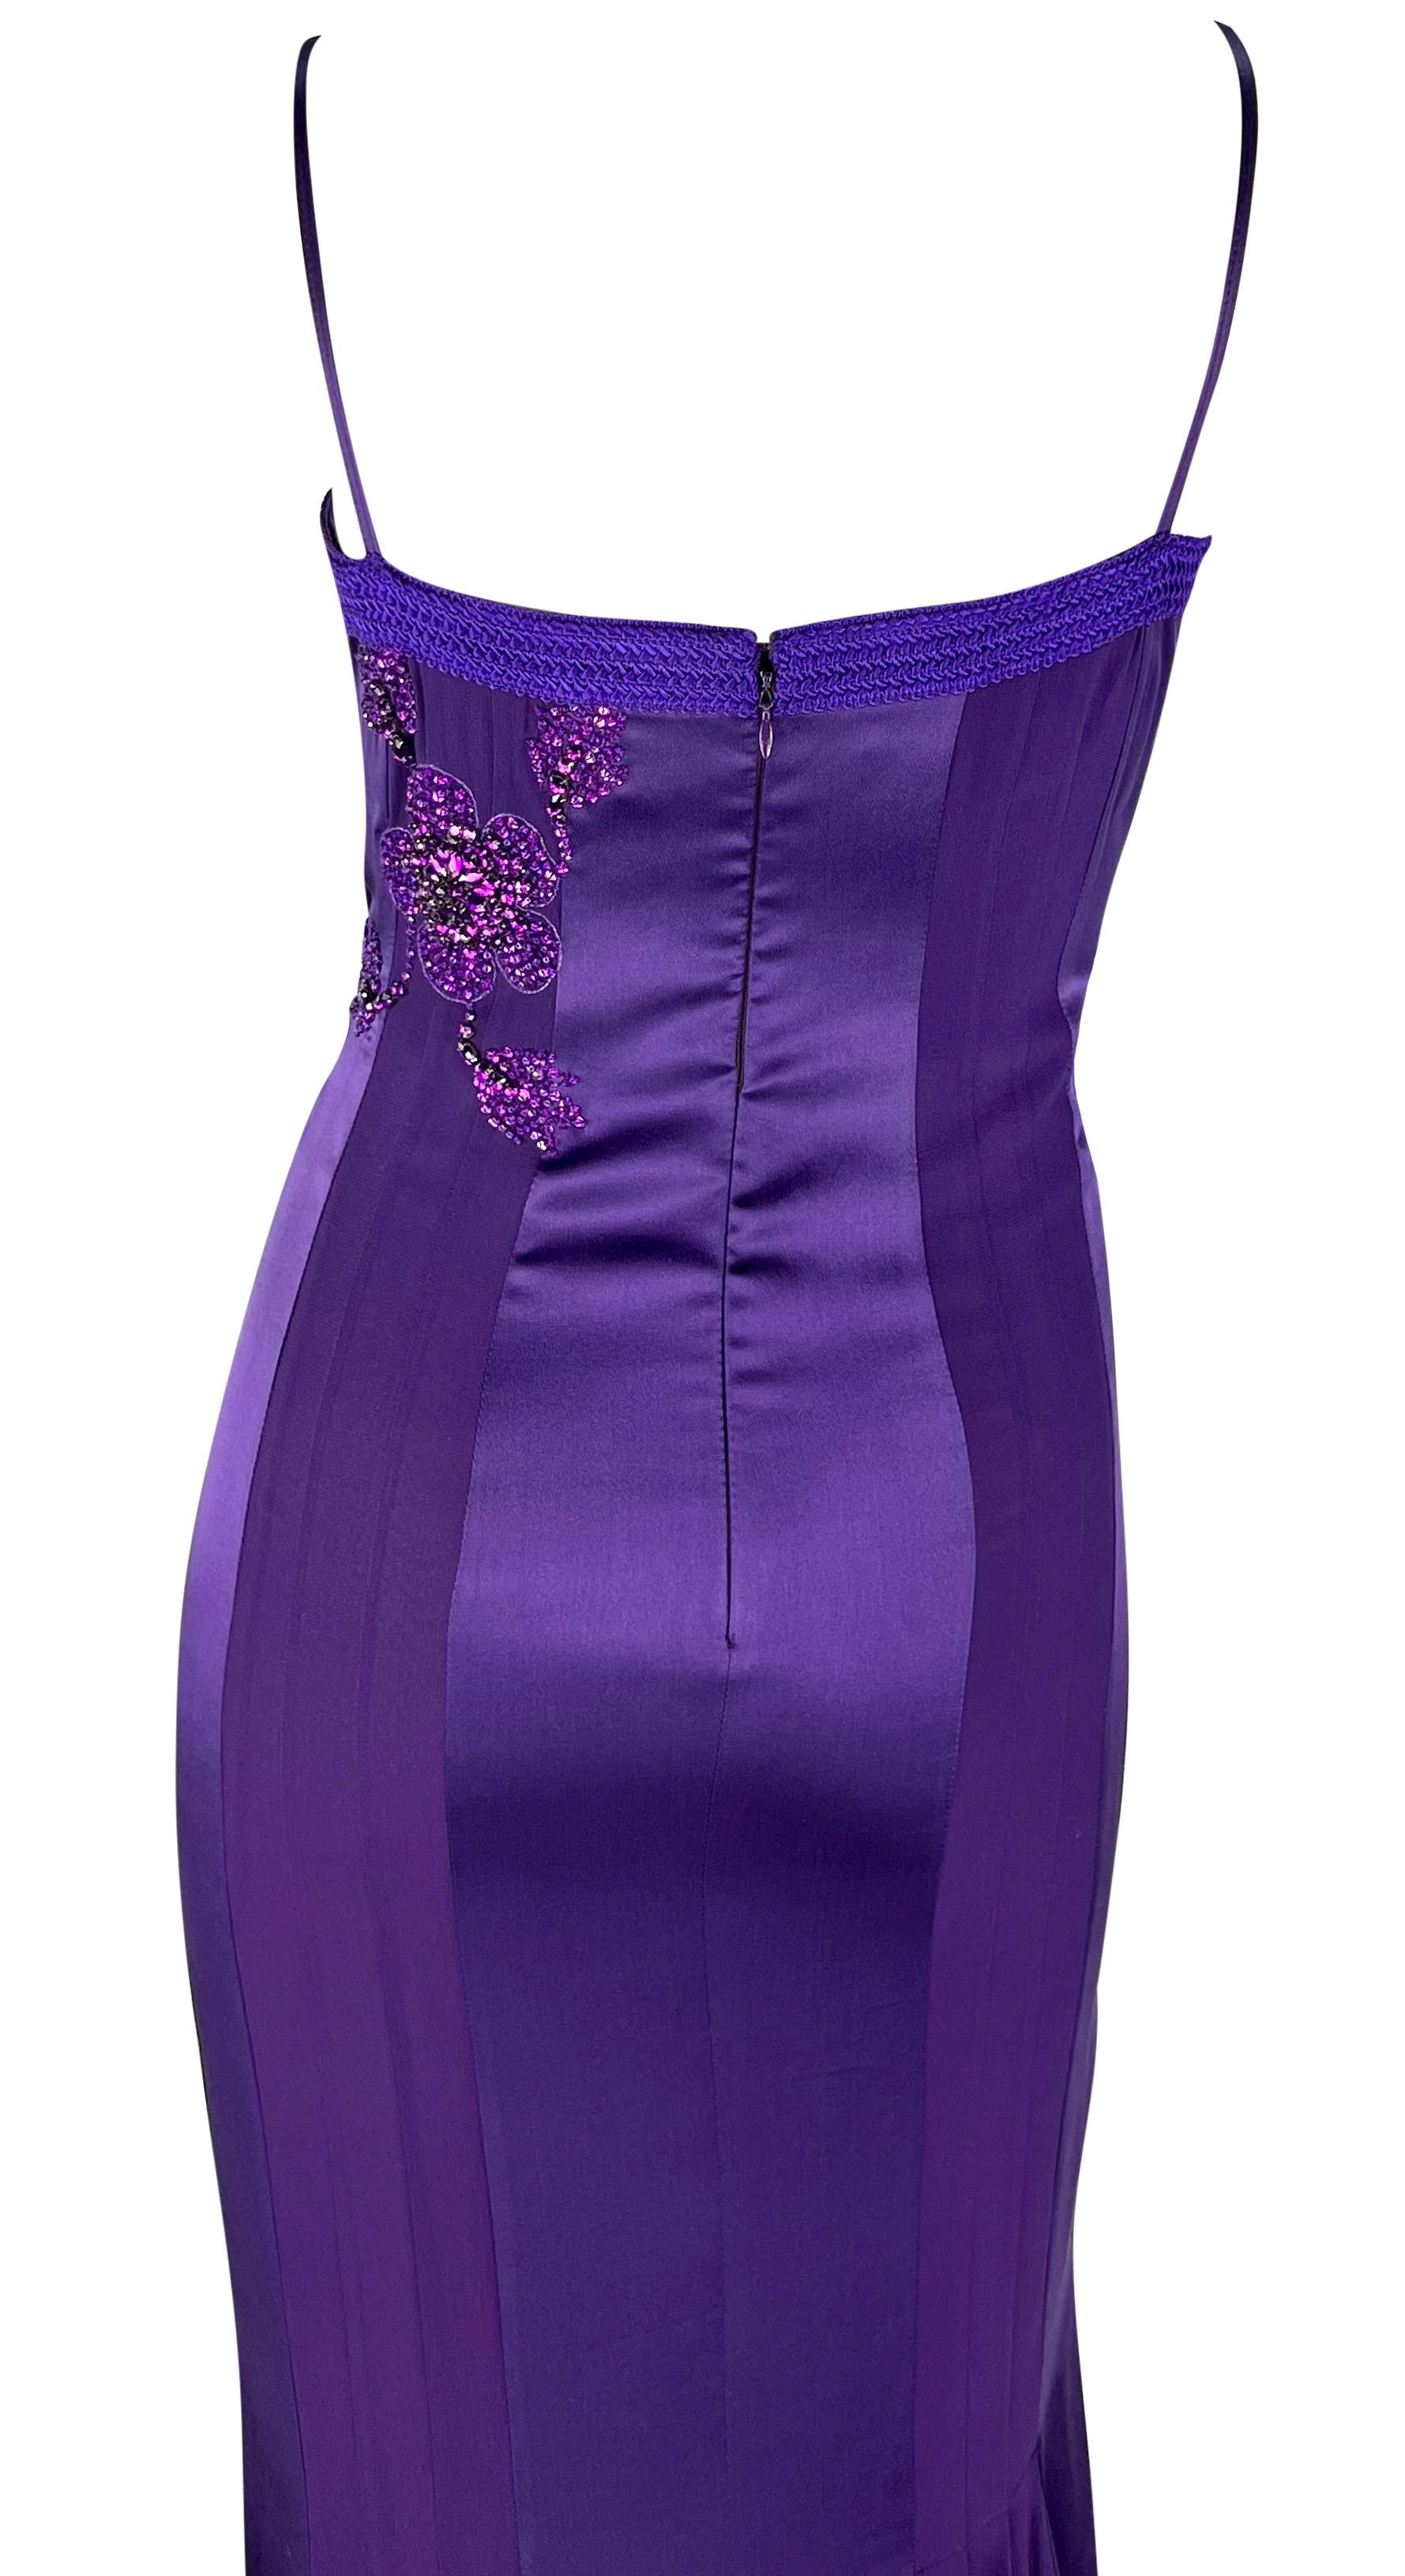 S/S 2005 Emanuel Ungaro by Giambattista Valli Rhinestone Purple Lace-Up Gown For Sale 8